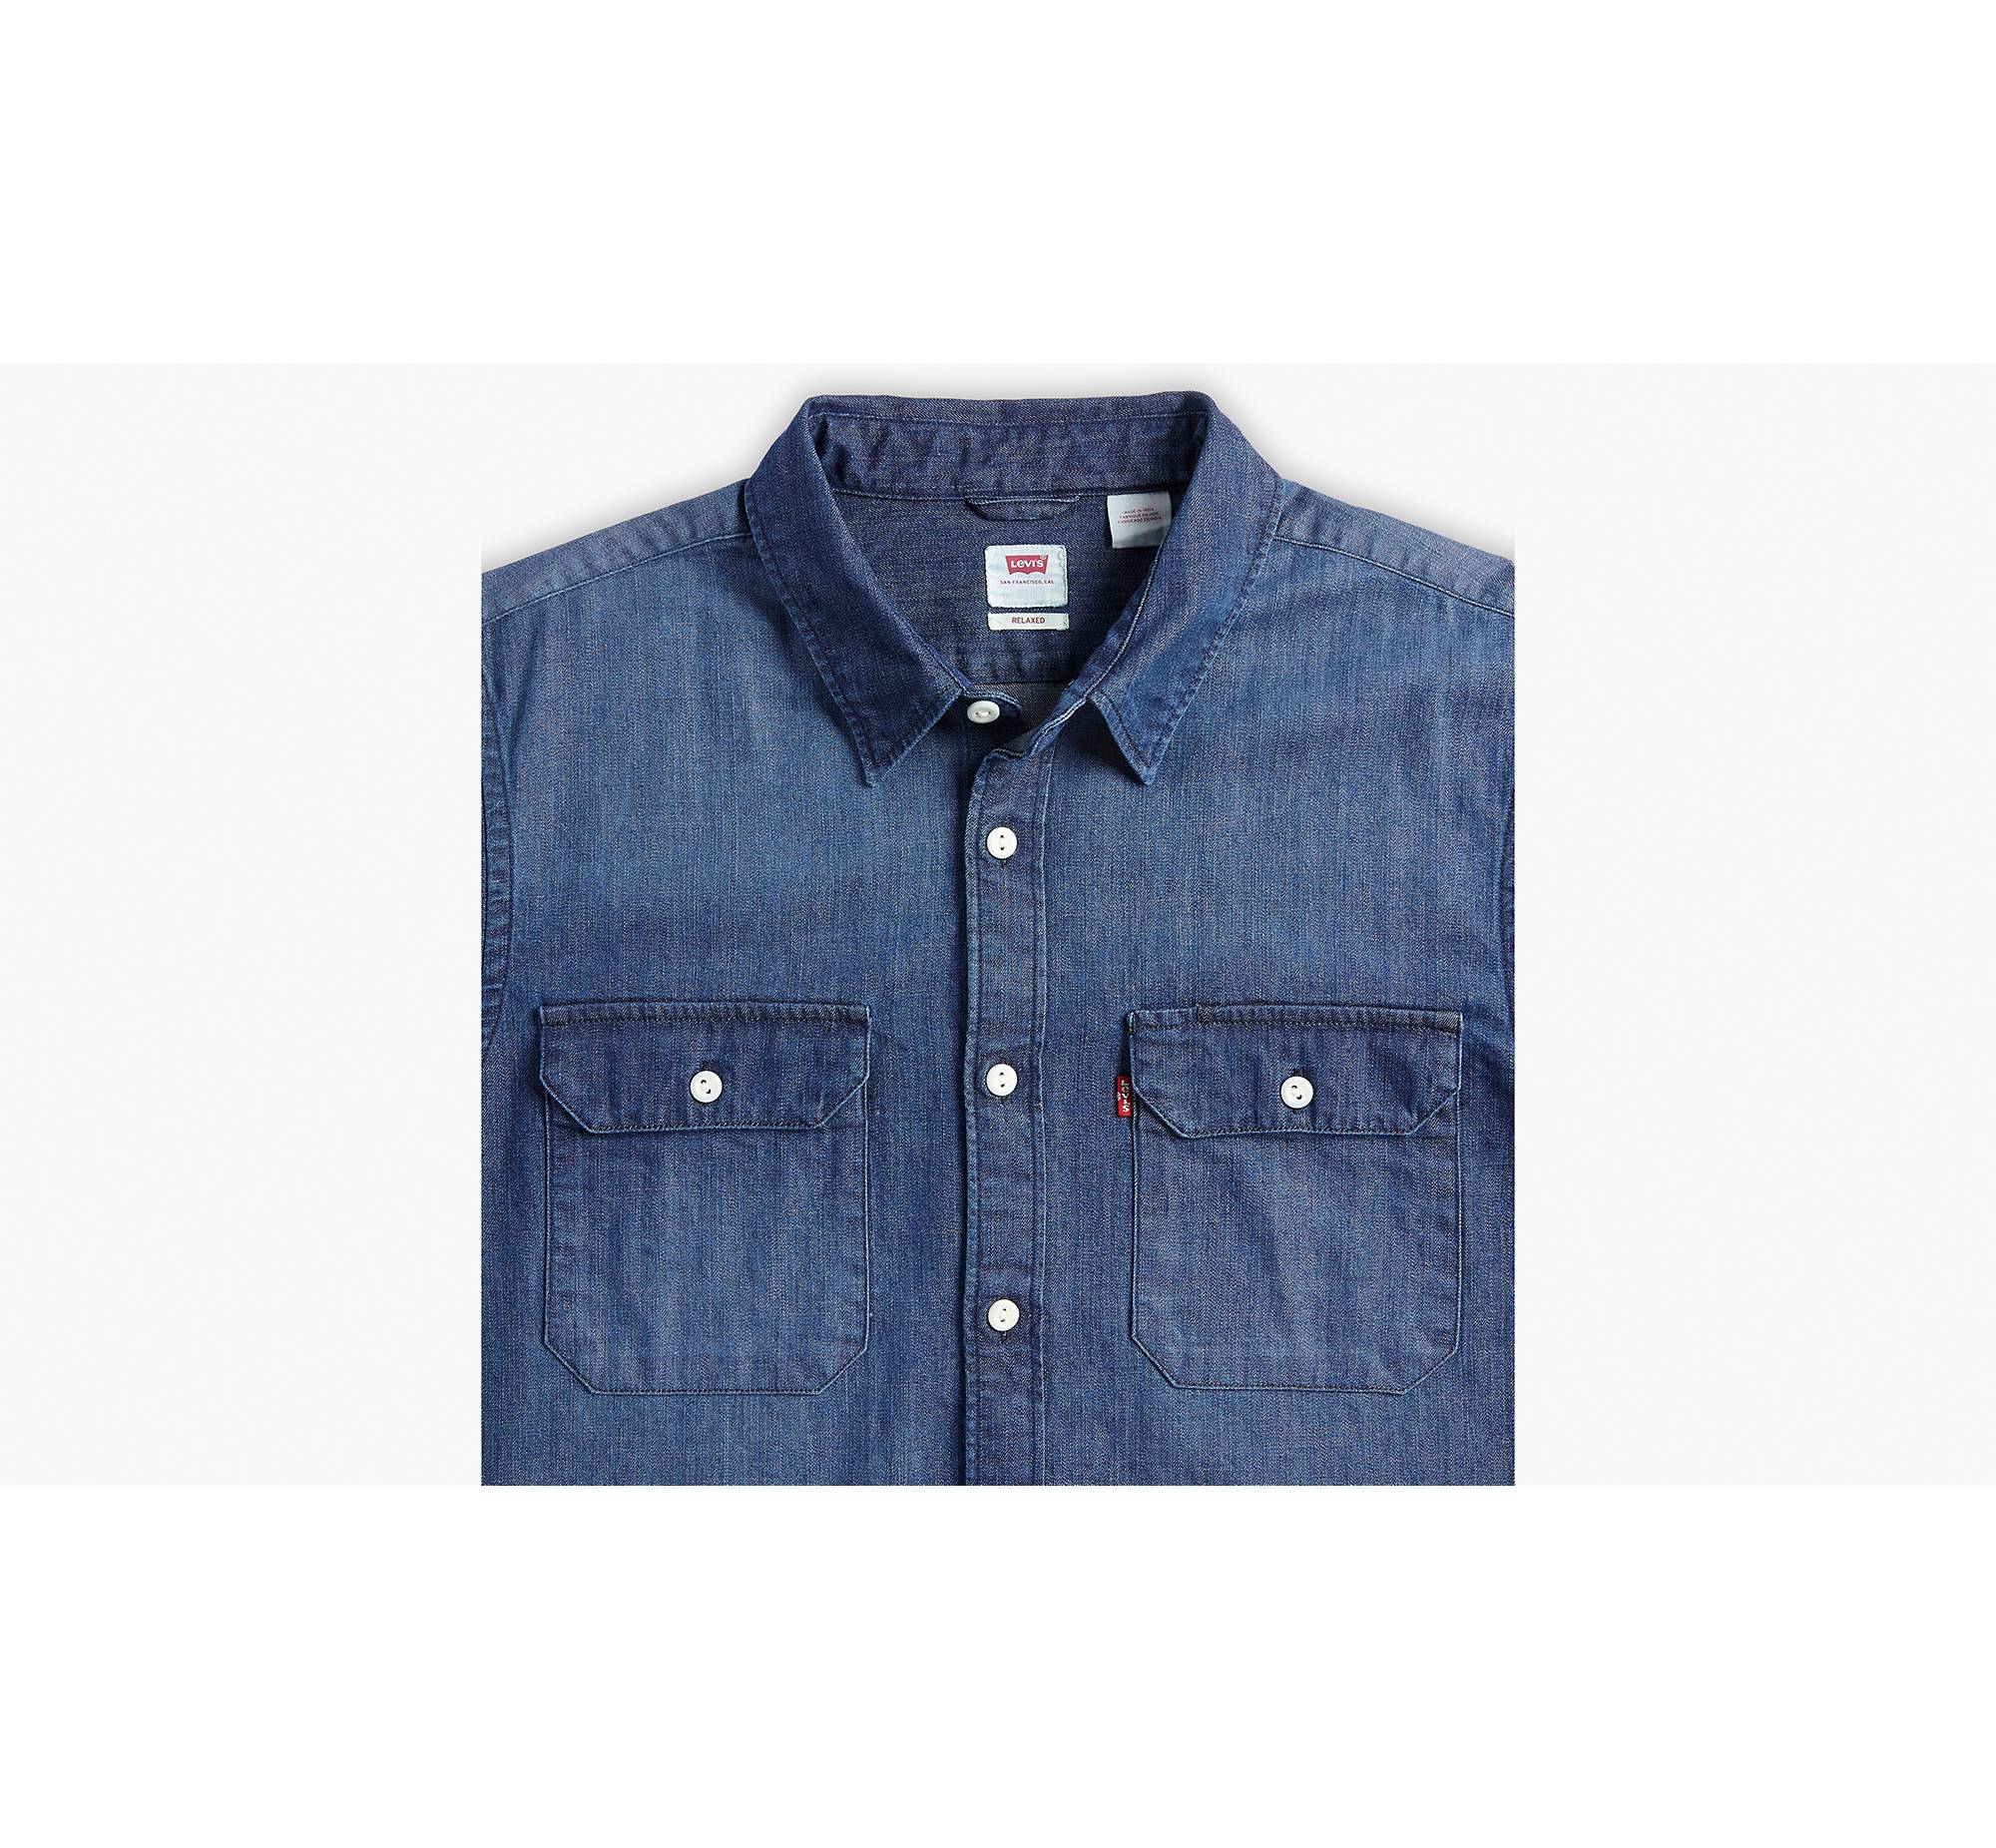 Jackson Worker Shirt   Blue   Levi's® GR